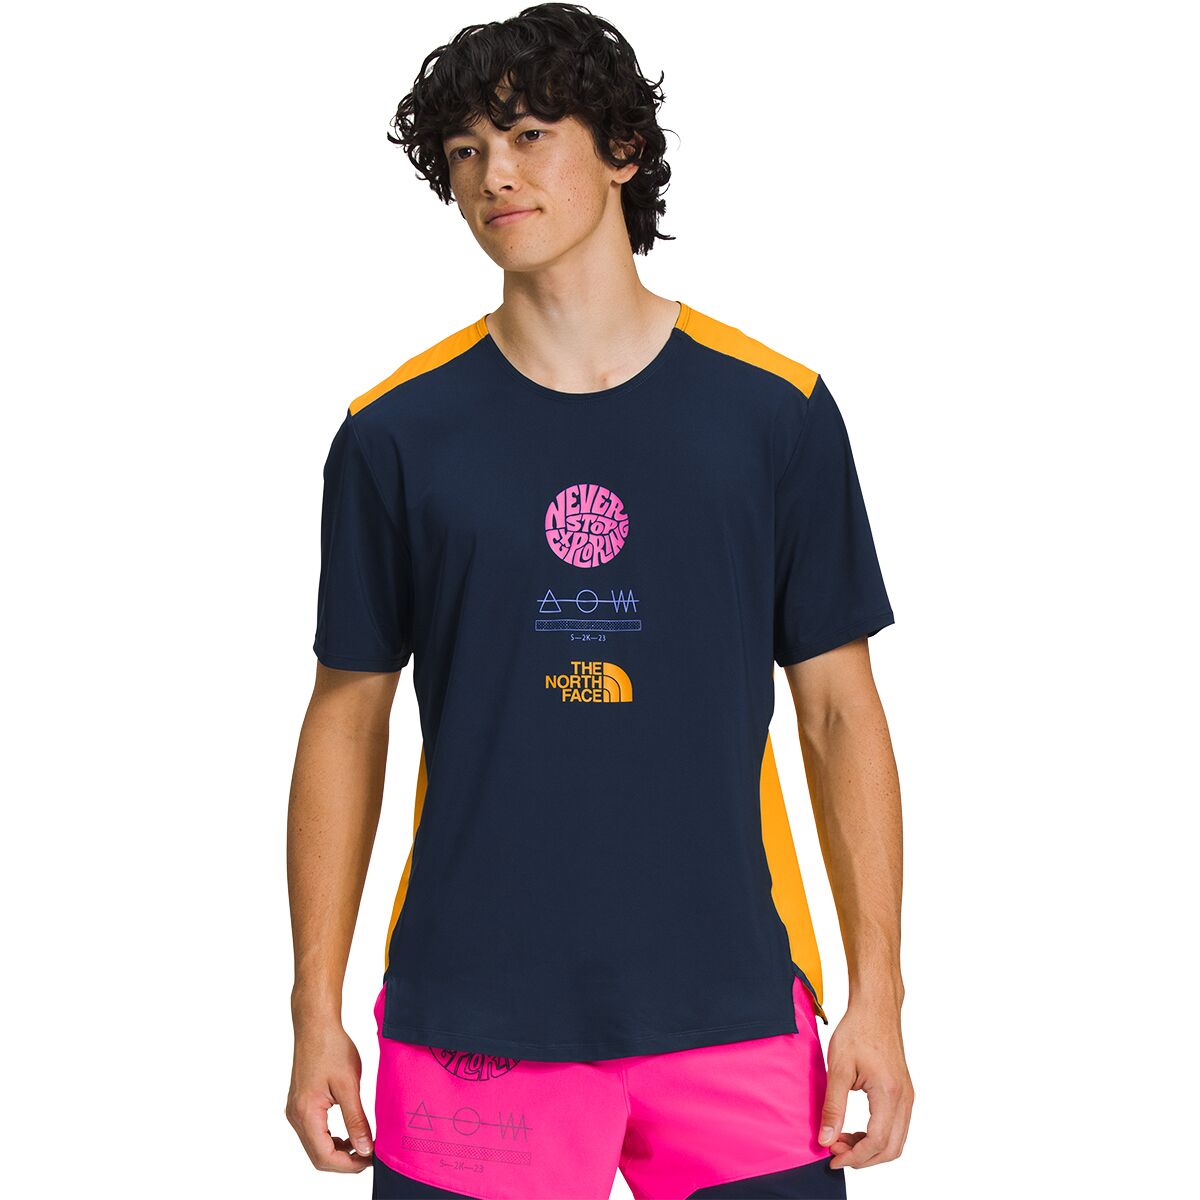 The North Face Trailwear Lost Coast Short-Sleeve Shirt - Men's